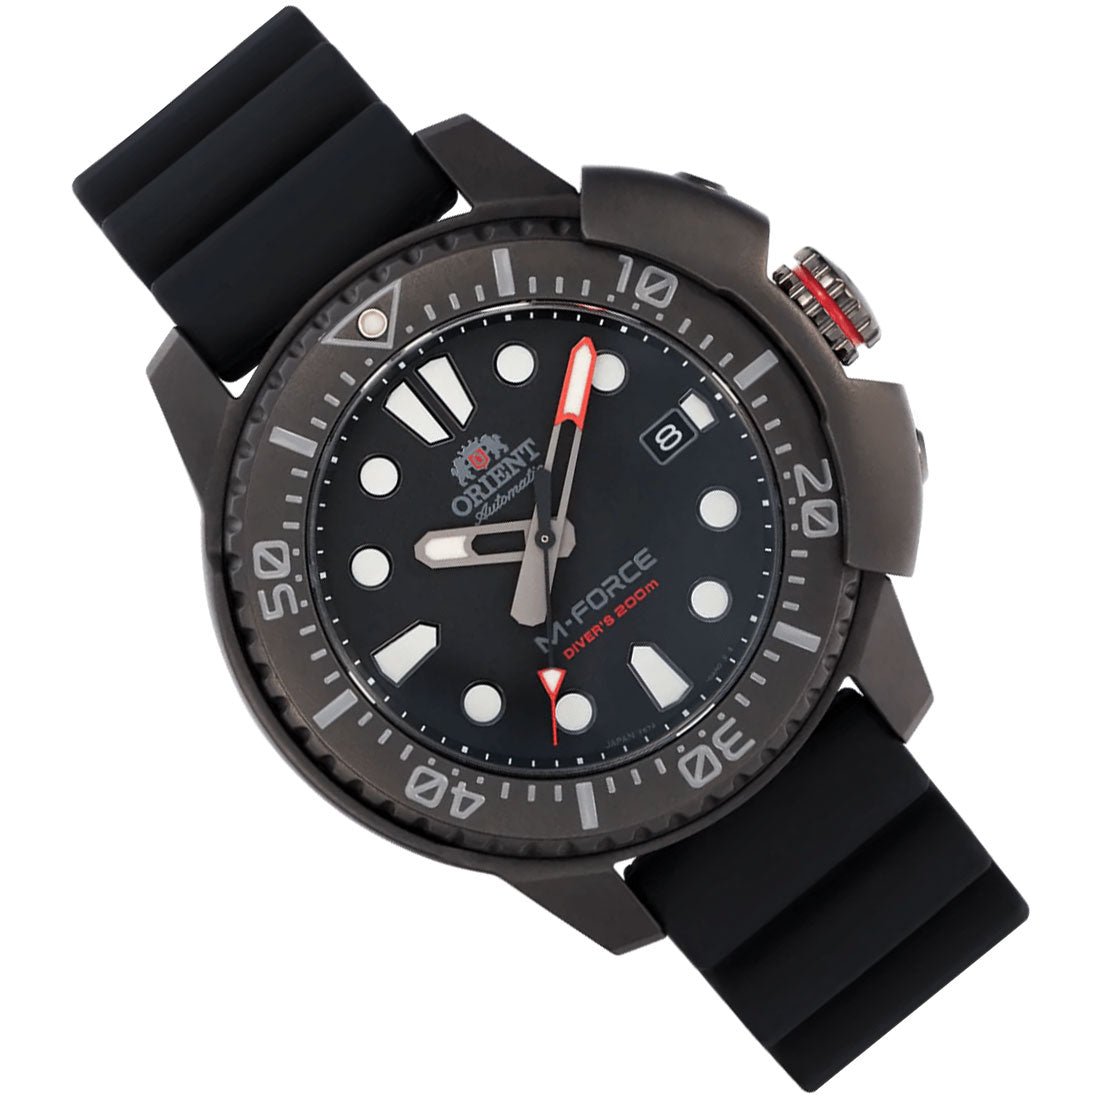 Orient M-Force Black Rubber RA-AC0L03B00B RA-AC0L03B Diving Automatic Watch -Orient